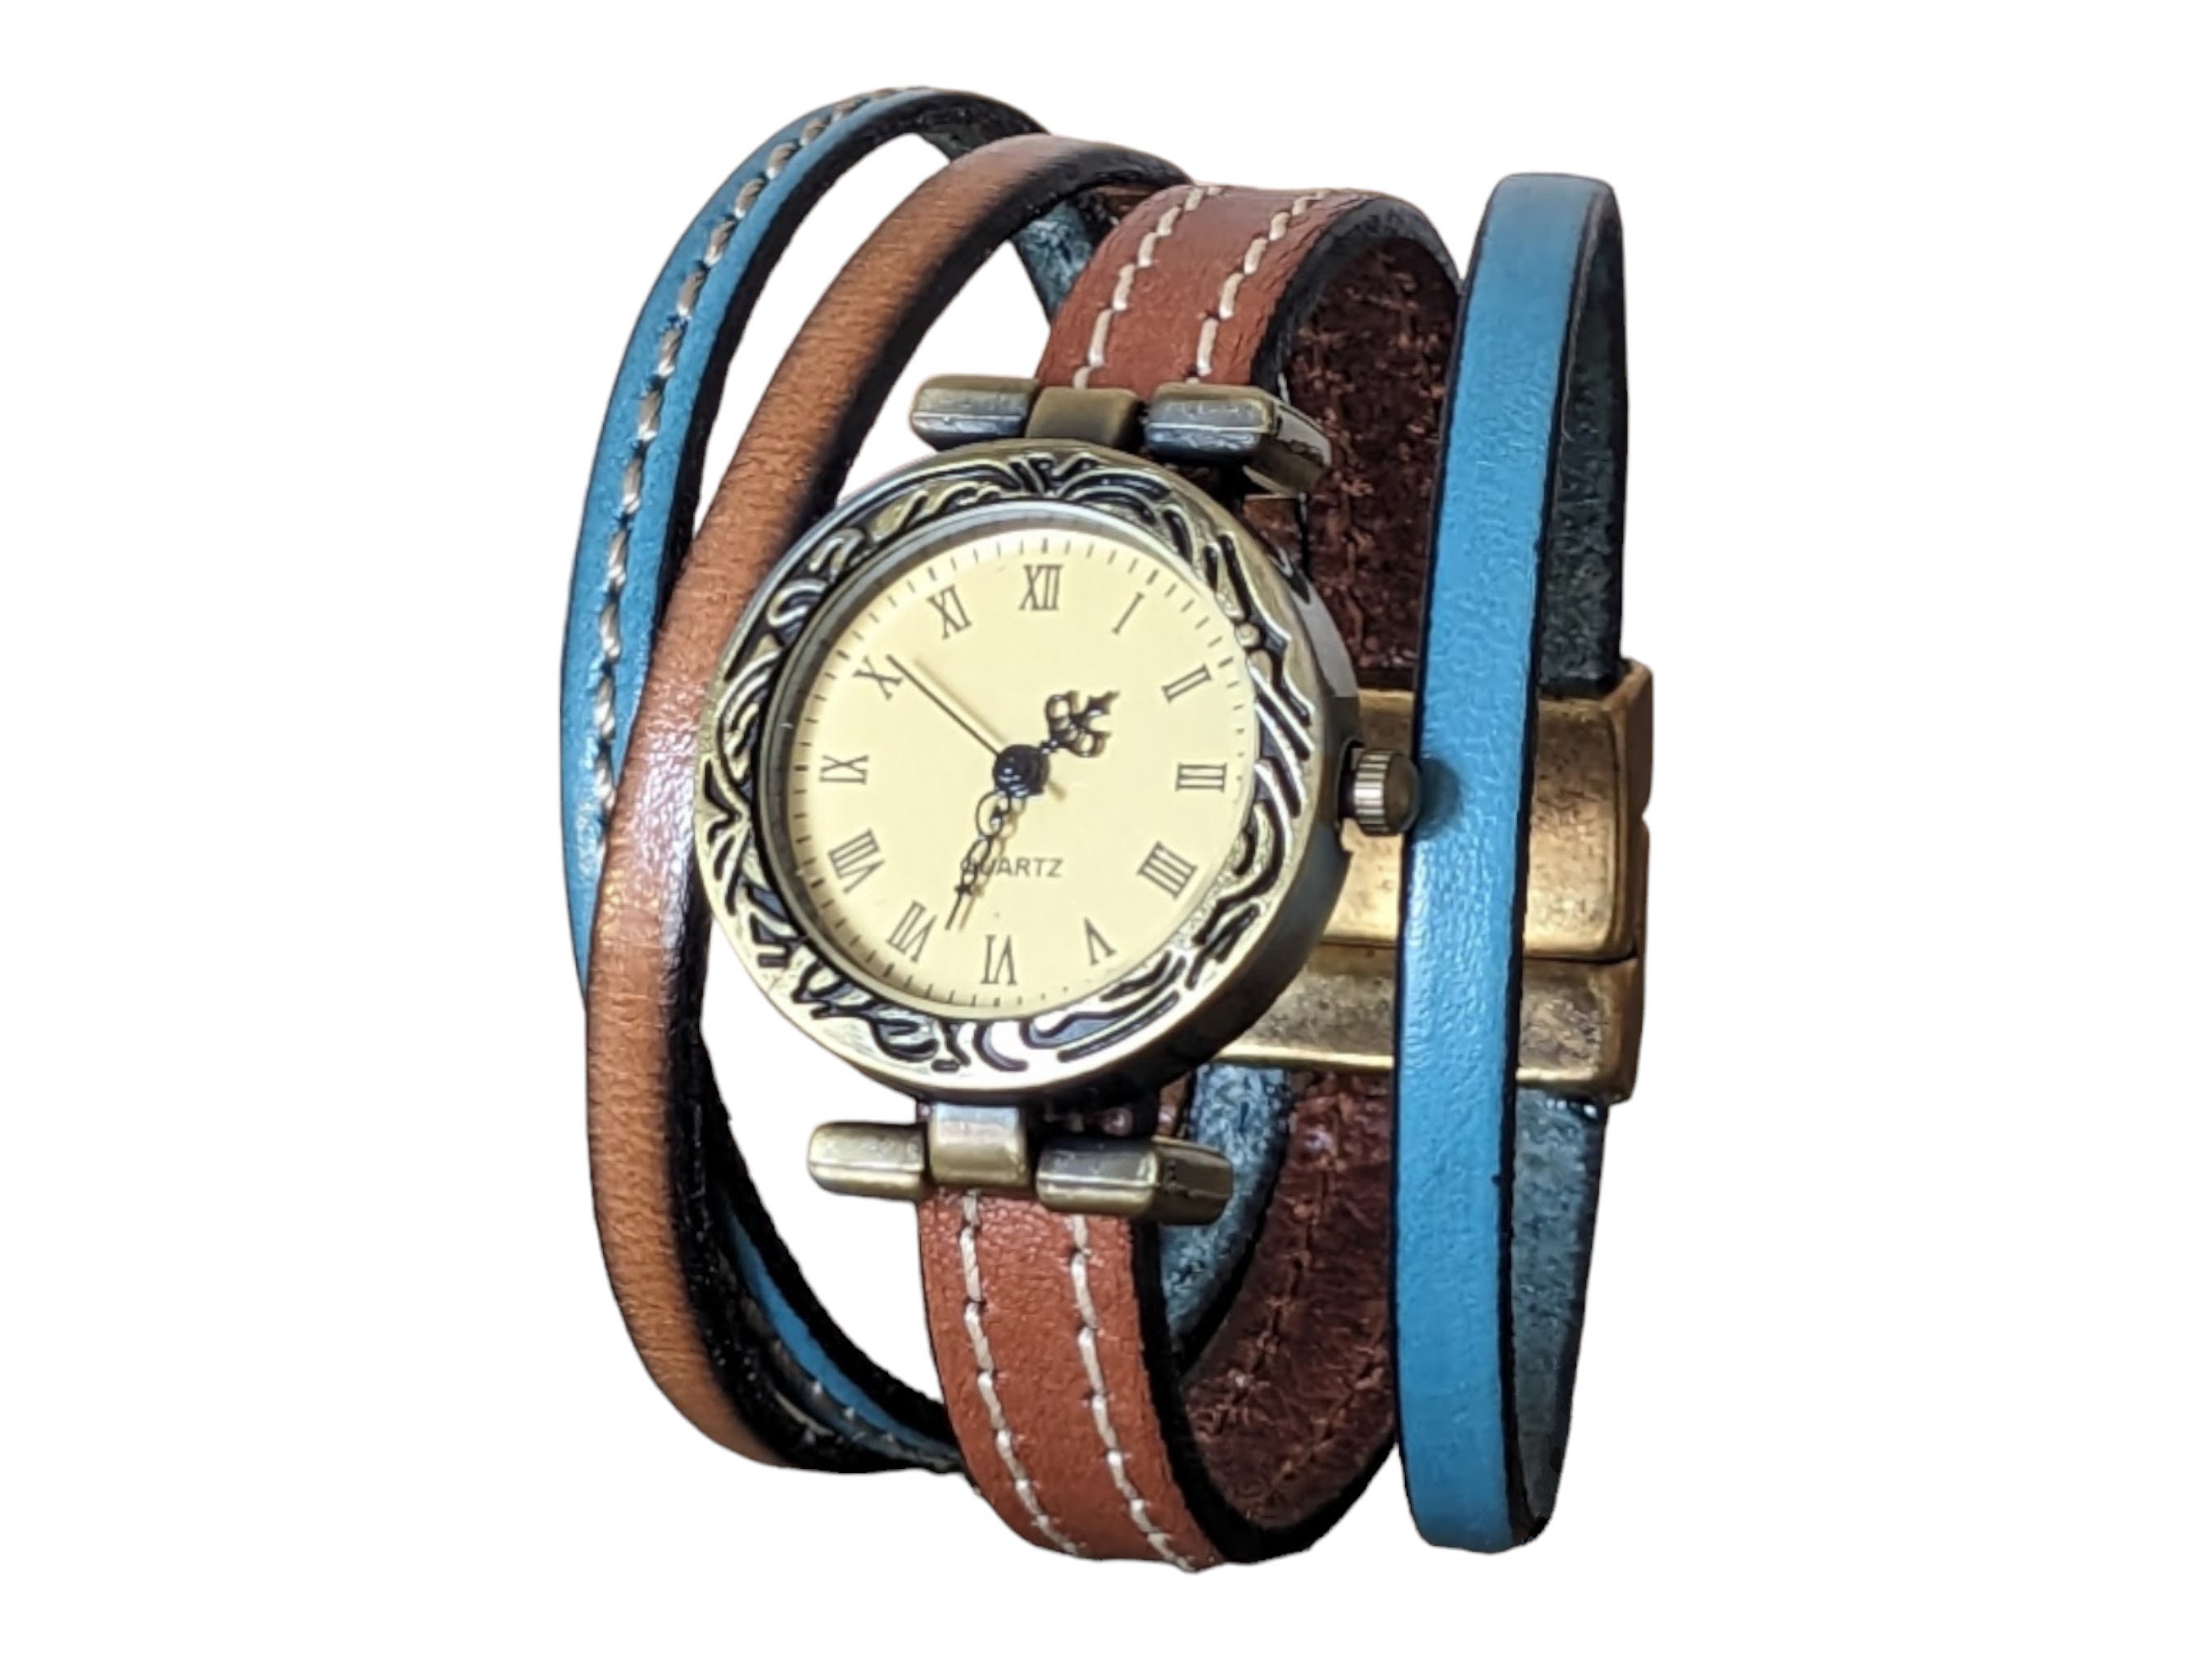 Vintage Womens Watch, Steampunk Watch, Leather Cuff Watch, Bracelet Watch